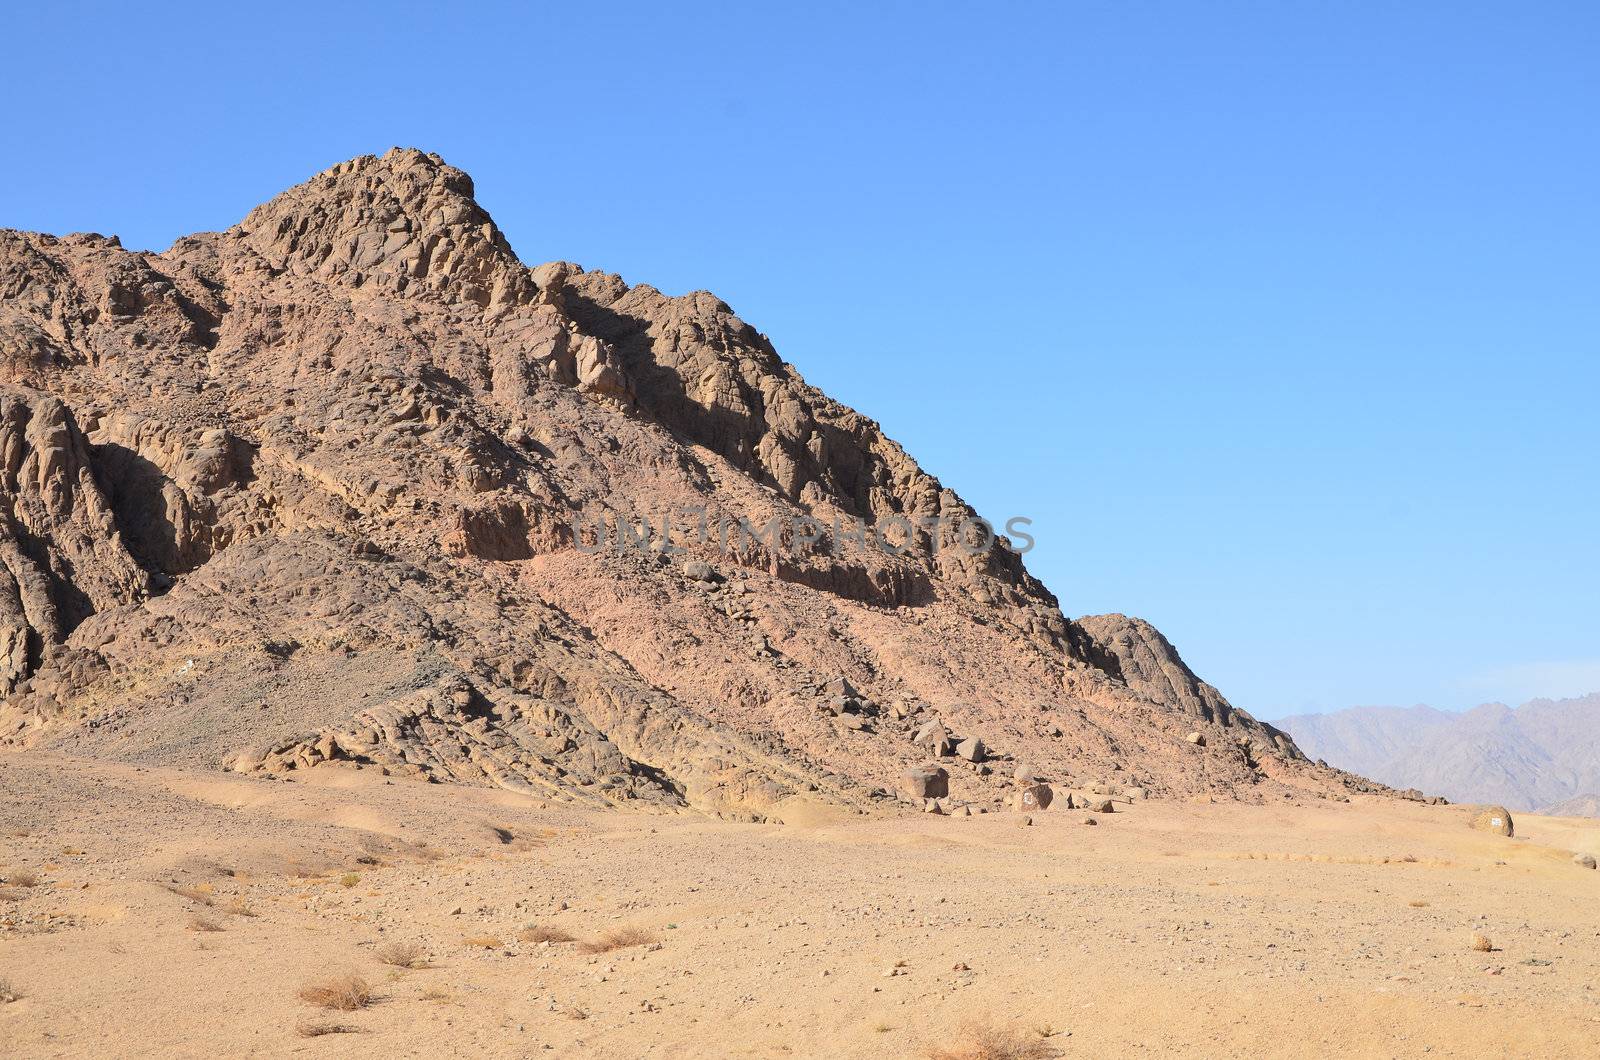  Desert landscape with dunes and rocks under bright sun